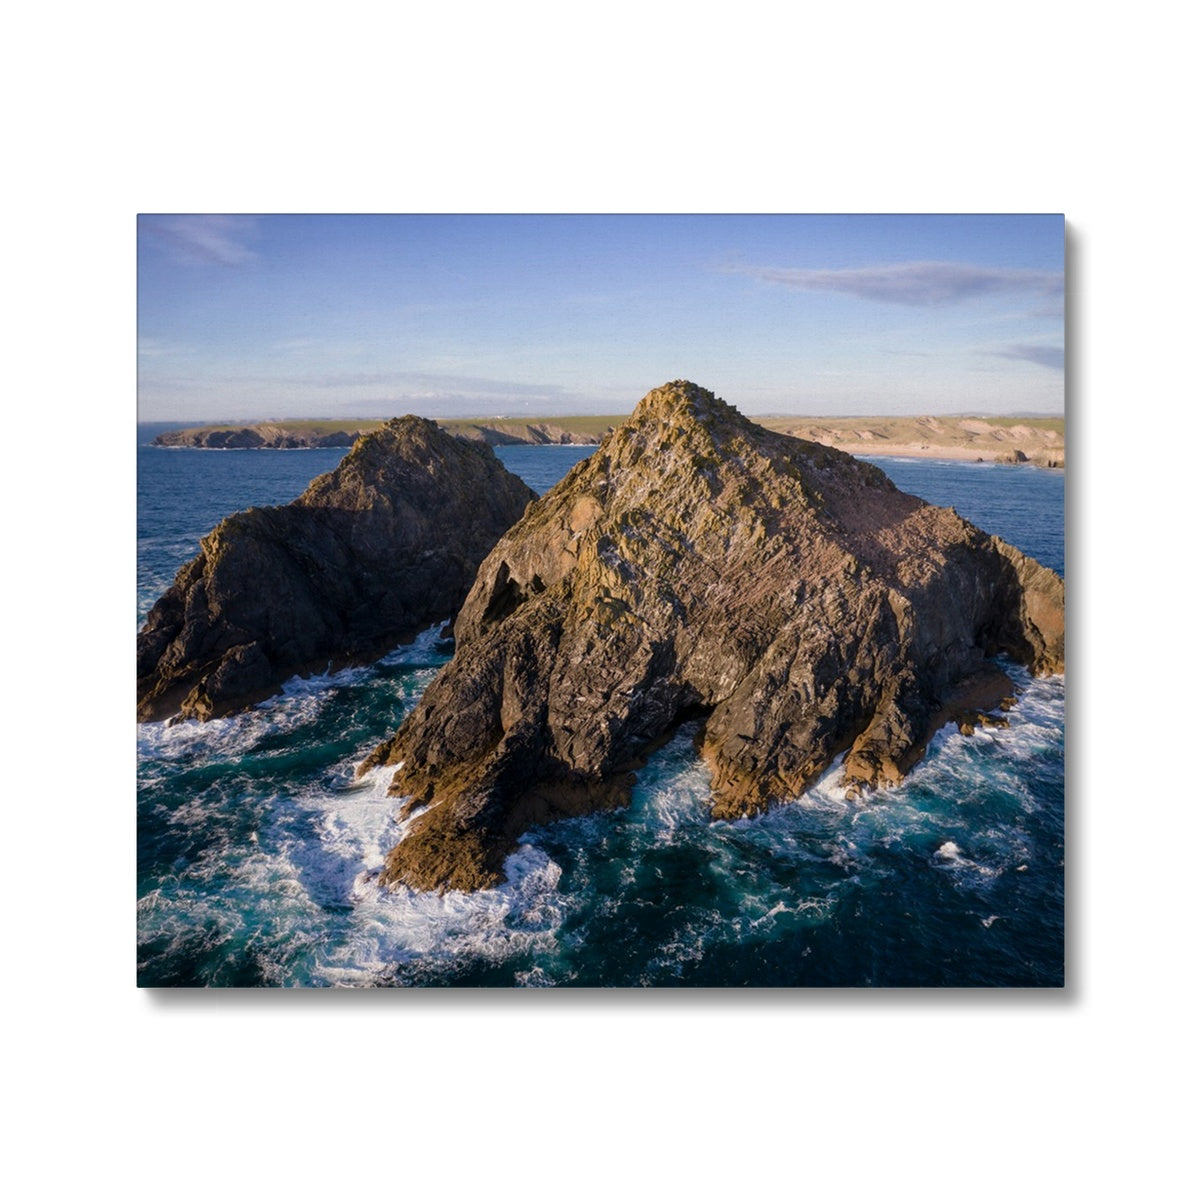 Carter's Rocks, Holywell Bay ~ Canvas